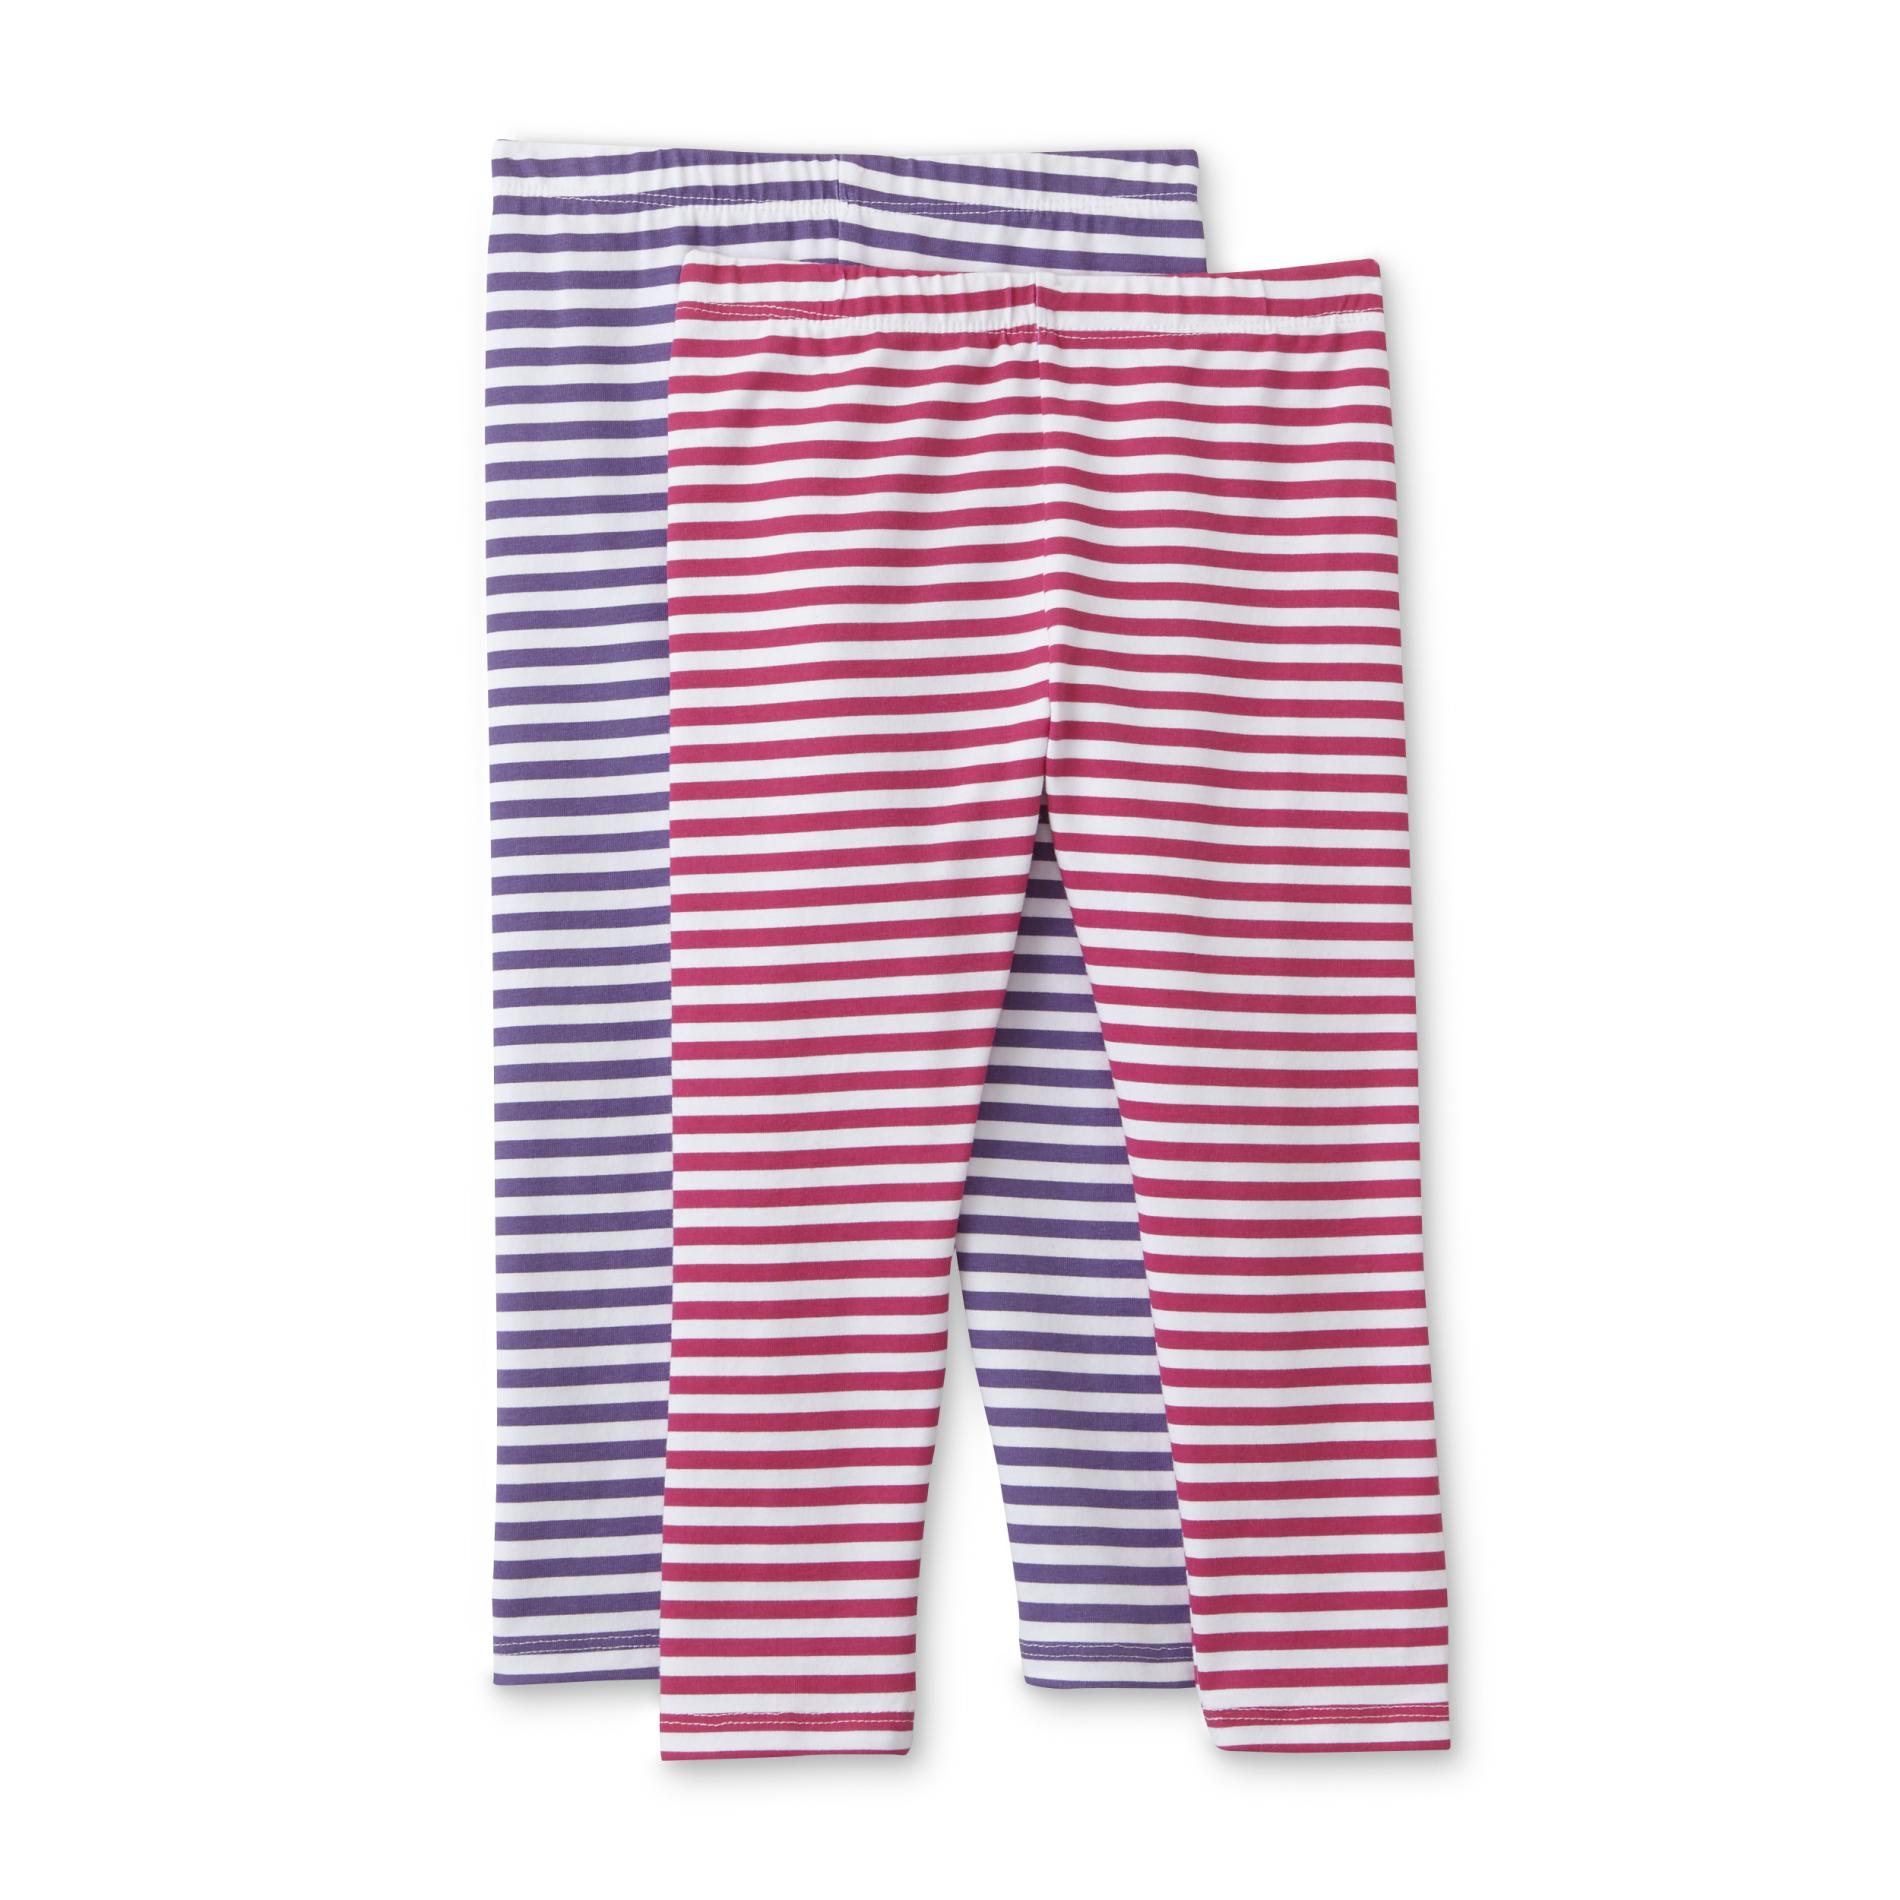 Toughskins Infant and Toddler Girls' 2-Pack Leggings - Striped